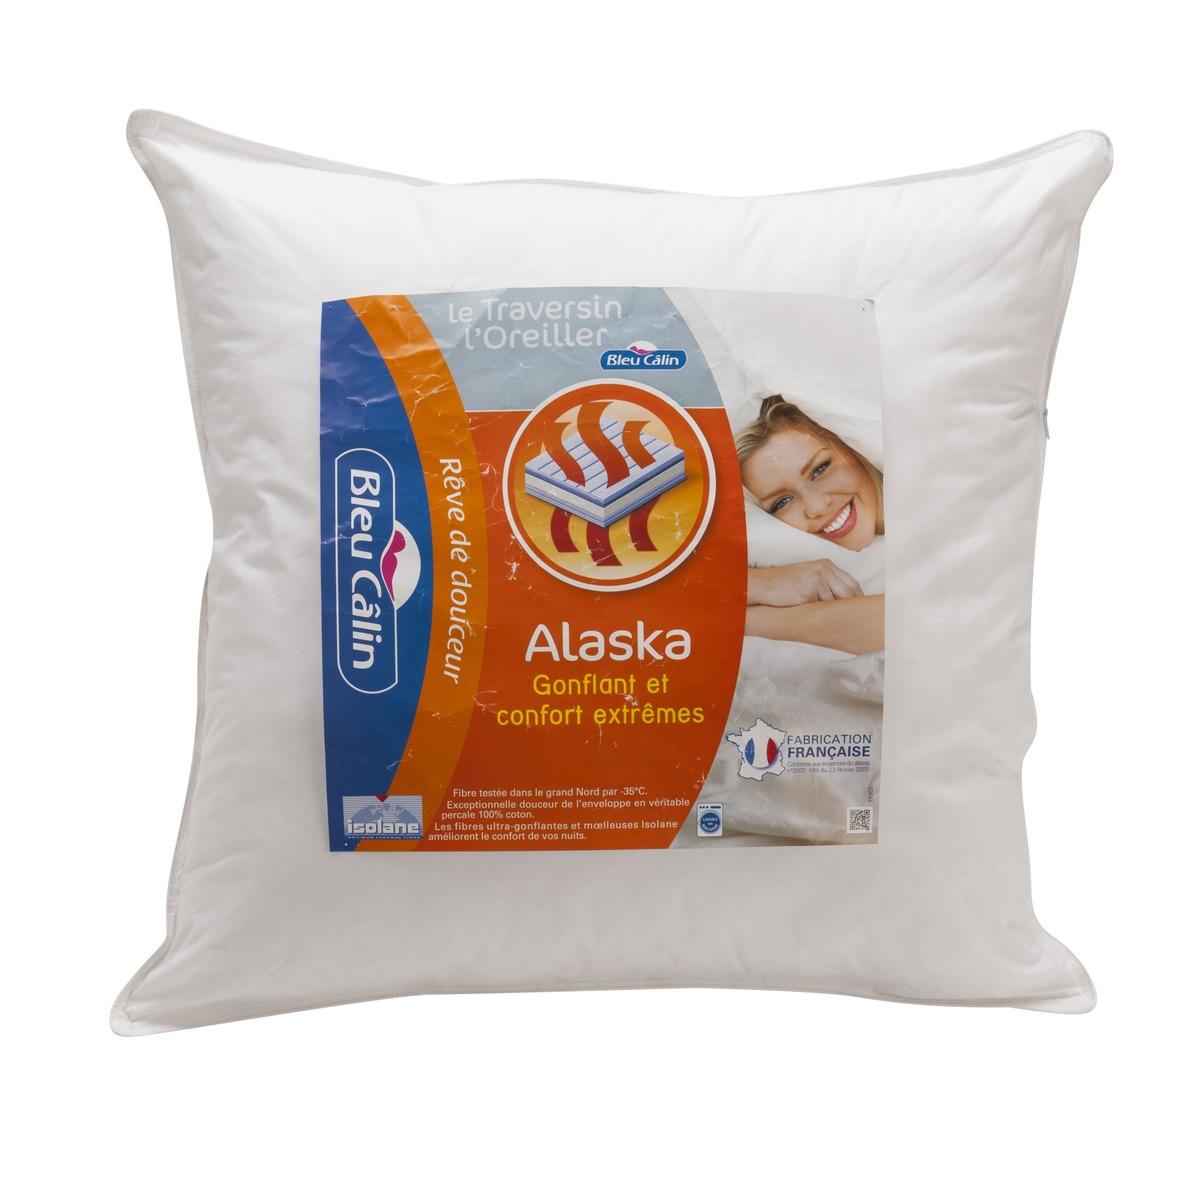 Oreiller alaska avec fibre isolane - 60 x 60 cm - Blanc